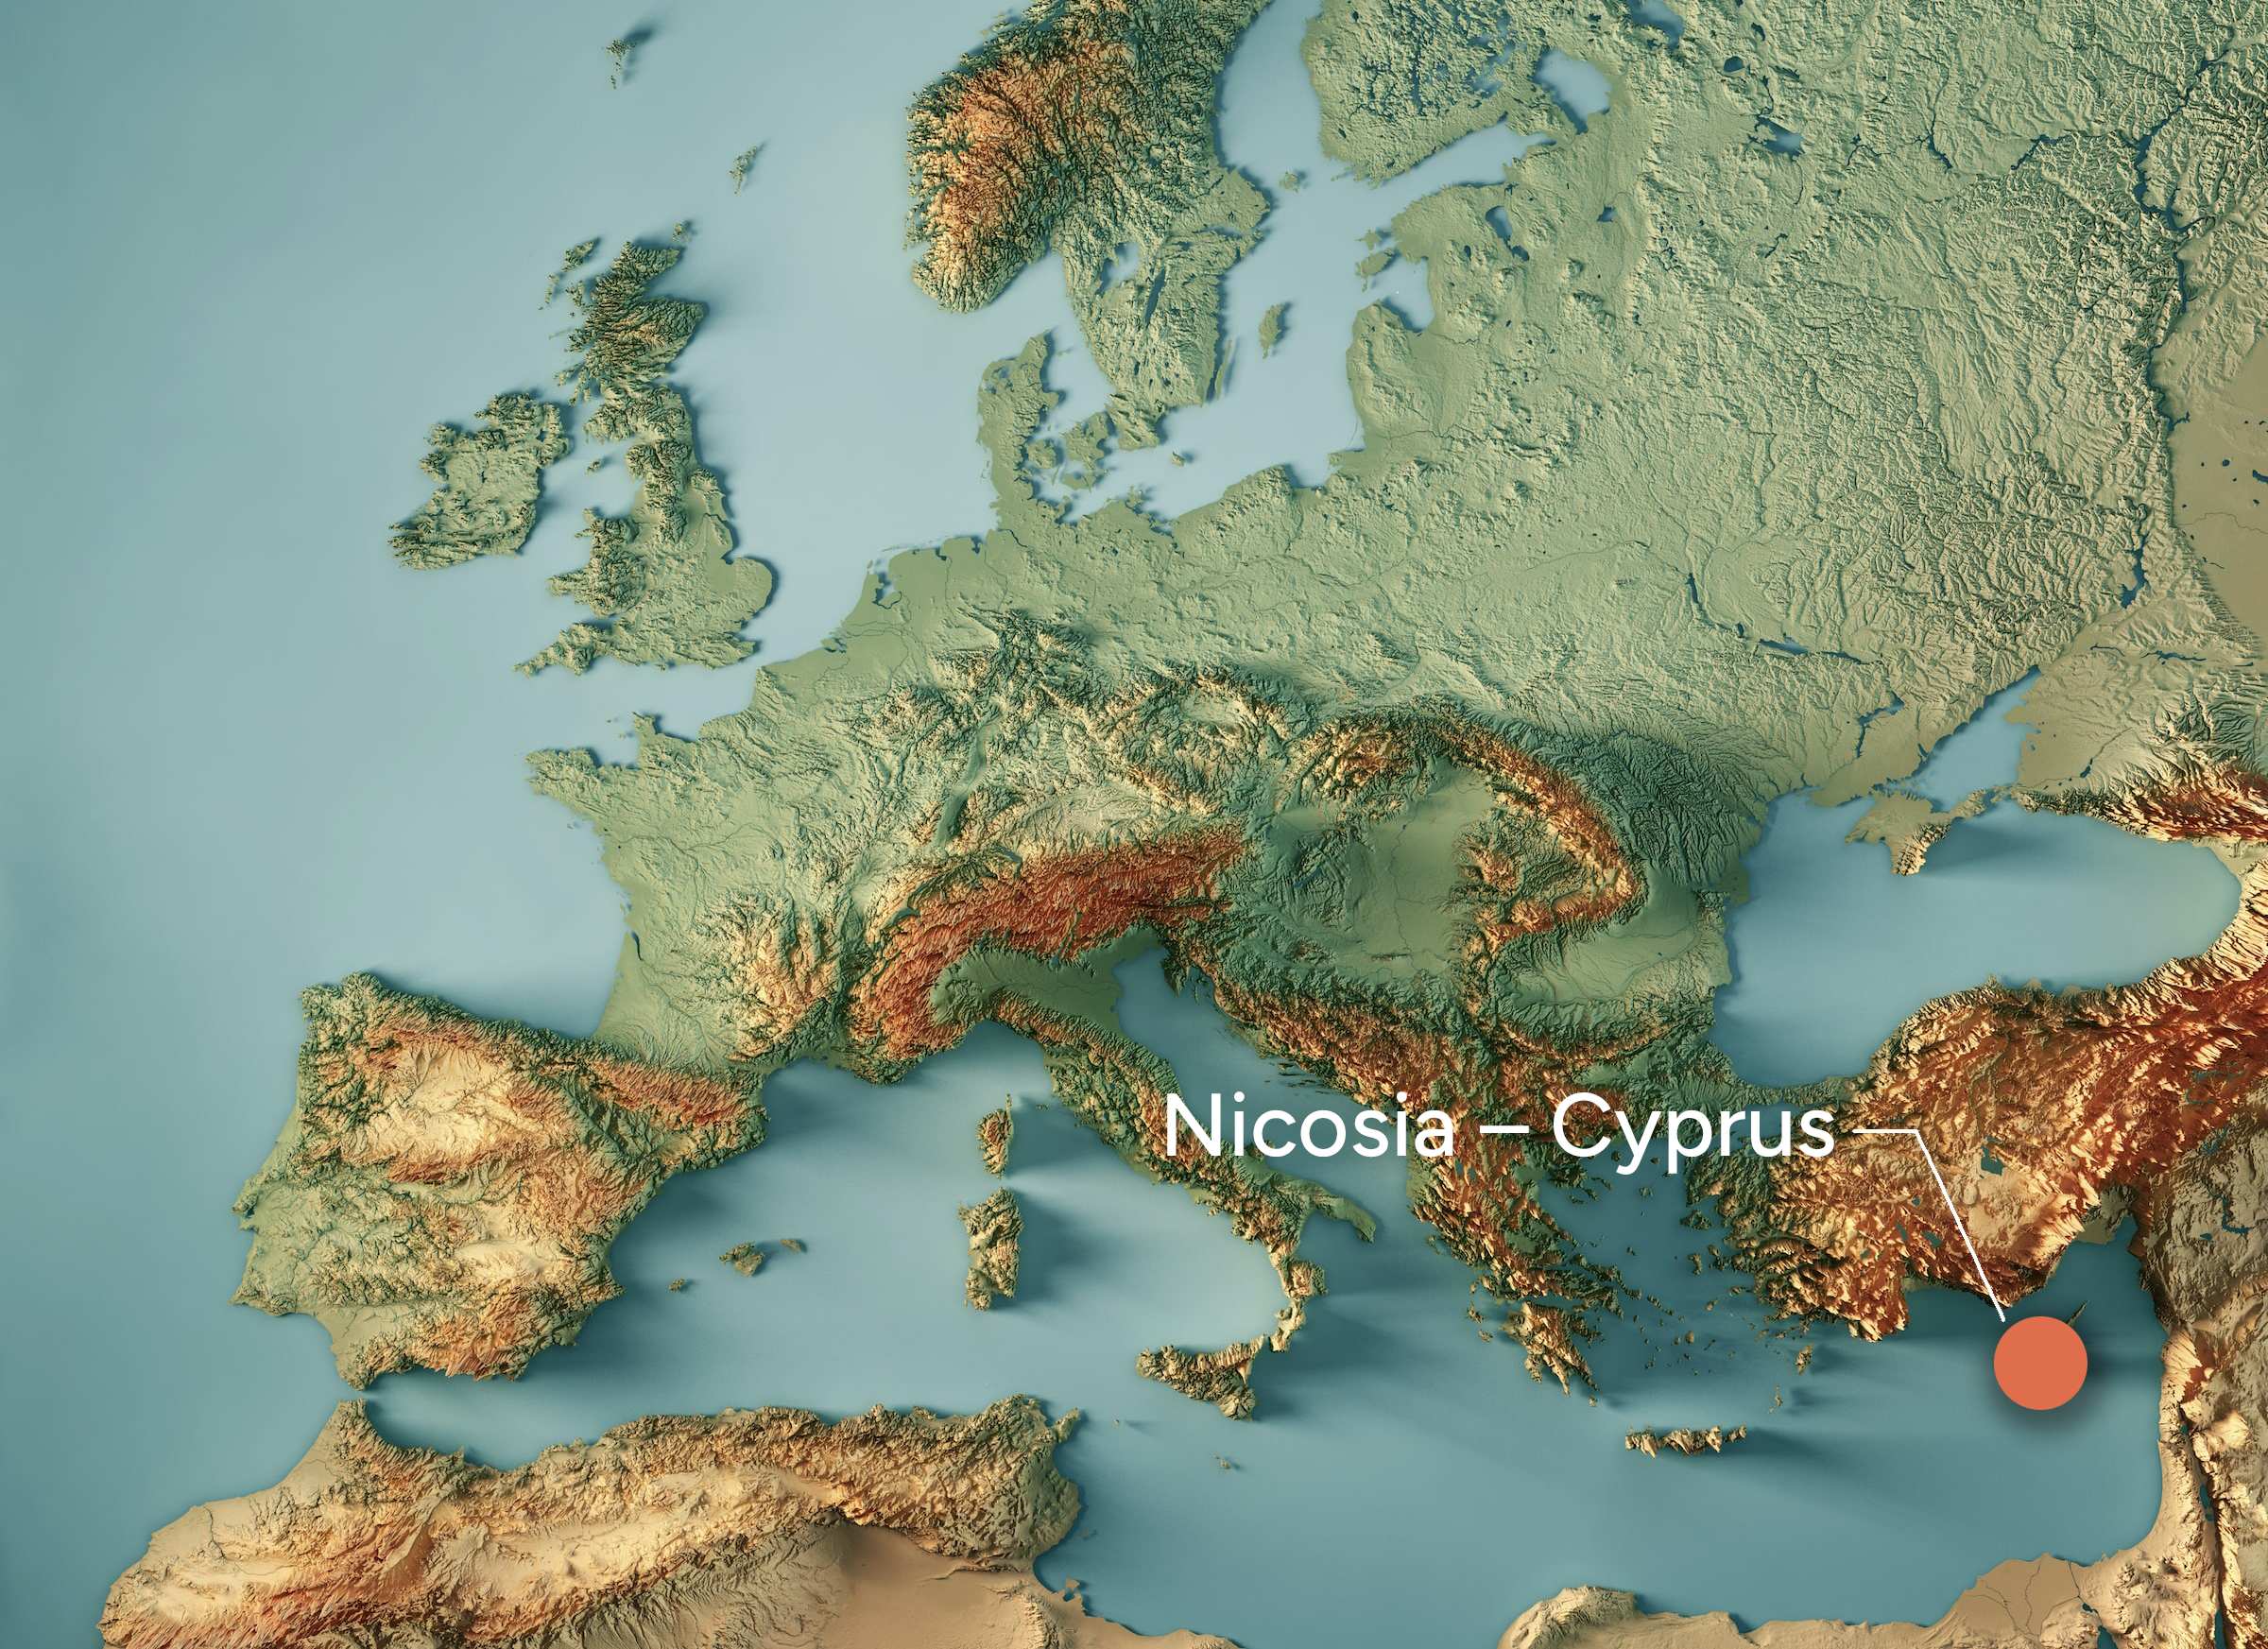 Topography map of Europe highlighting Nicosia, Cyprus